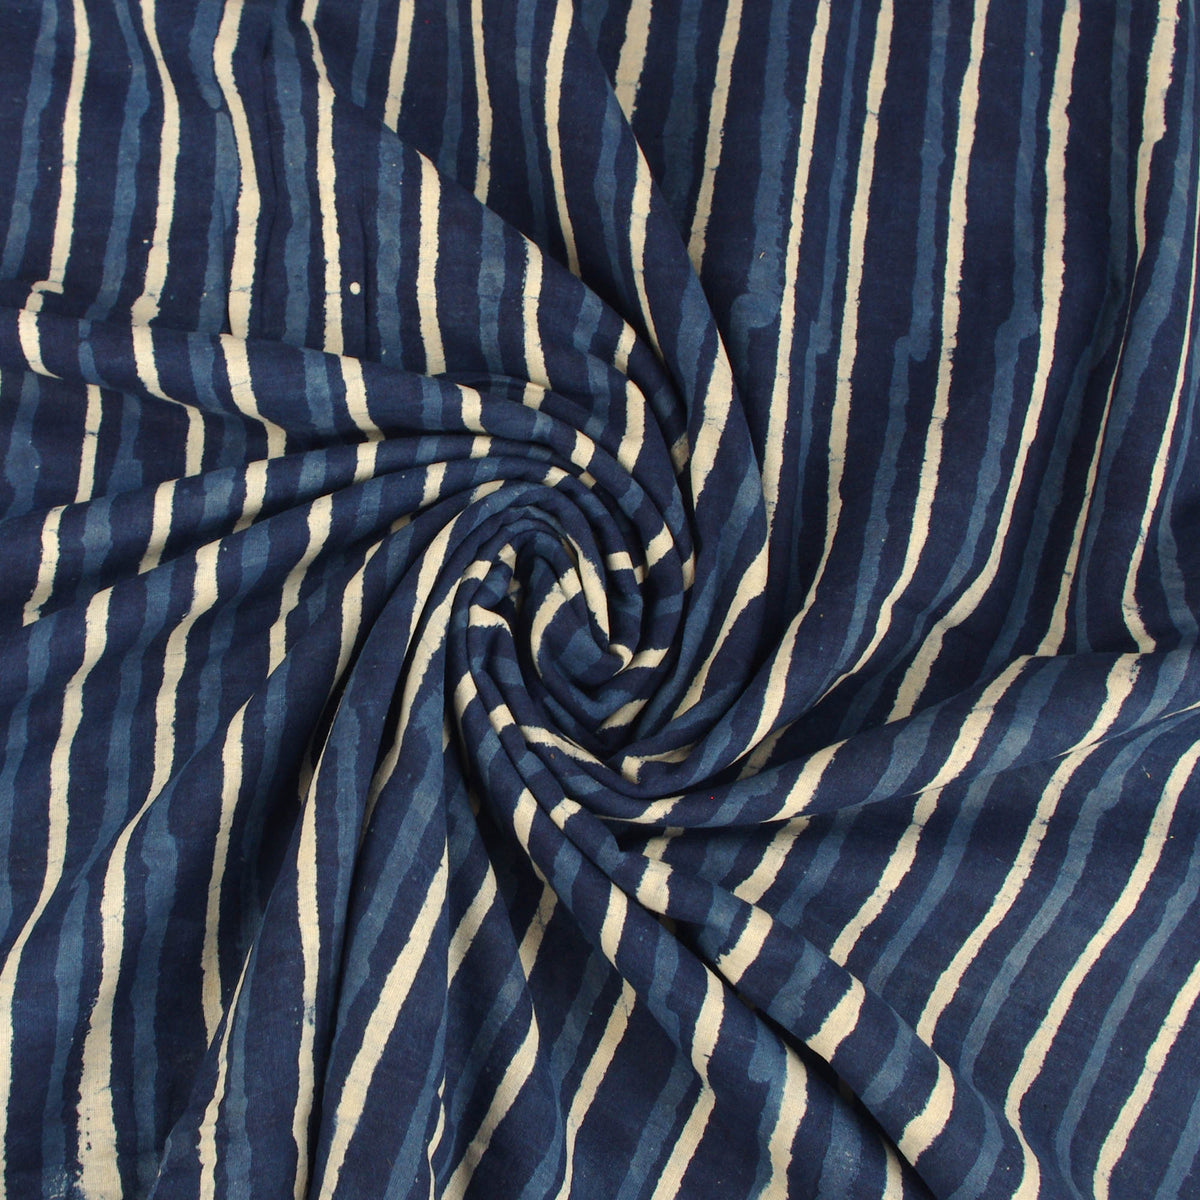 Block Print Fabric - Indigo Striped - Design 572